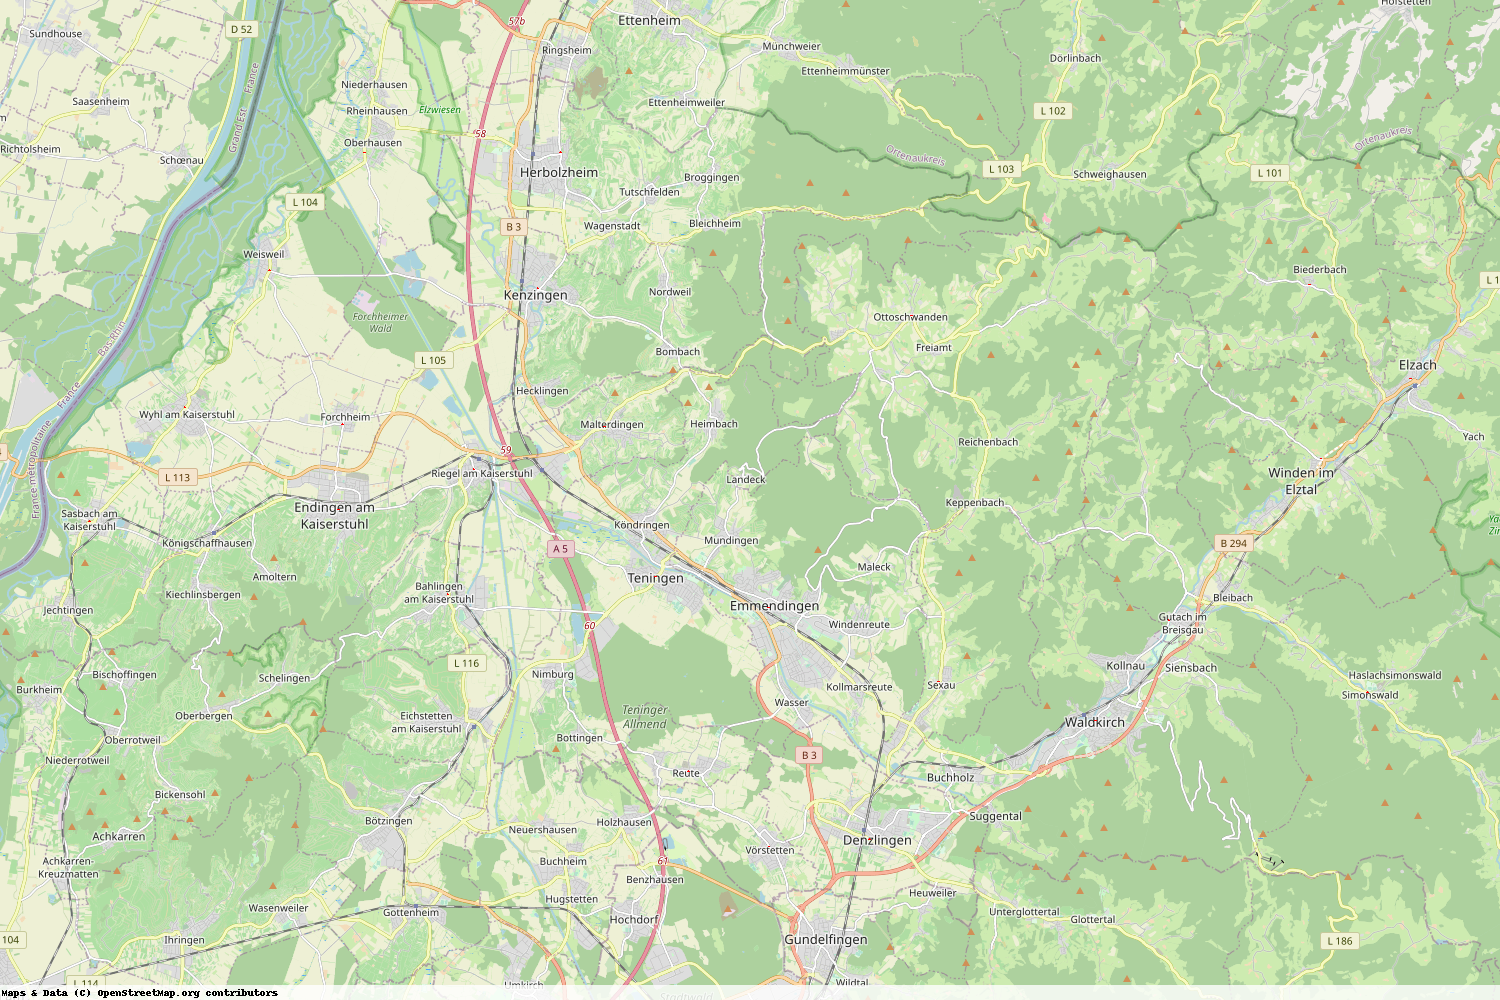 Ist gerade Stromausfall in Baden-Württemberg - Emmendingen?